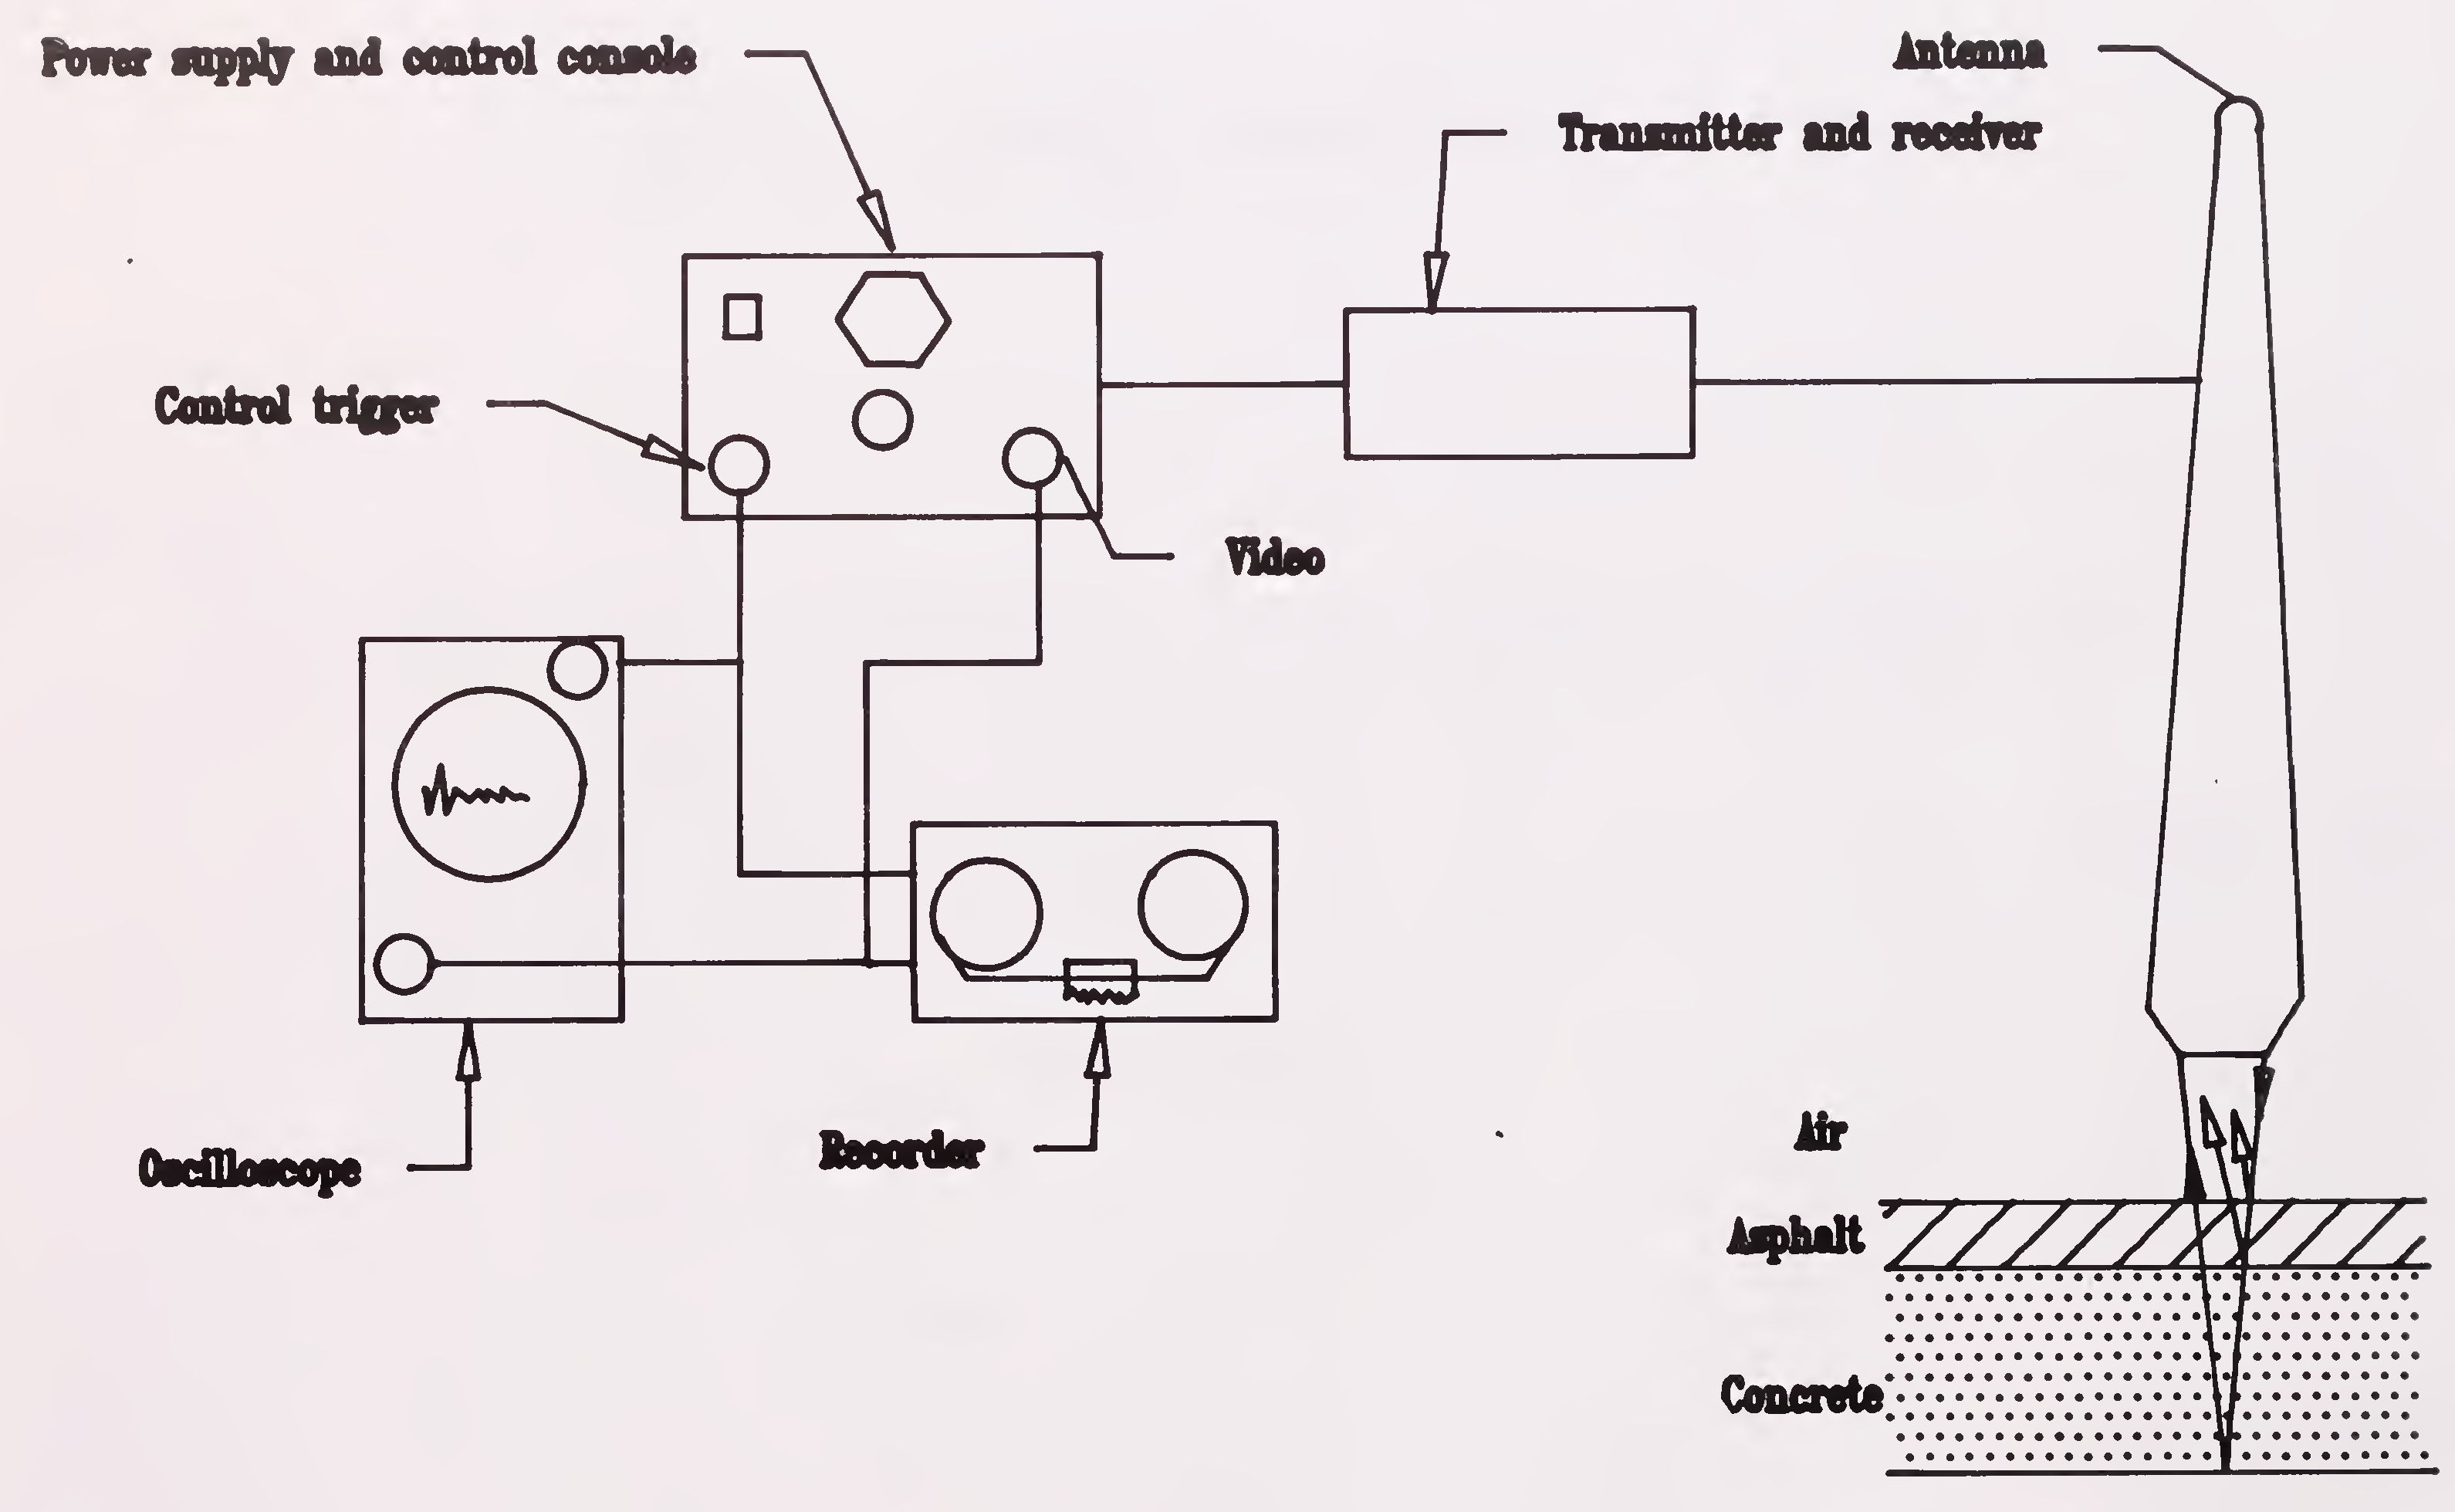 Fig.4.2 ரேடார் அமைப்பின் கூறுகள்